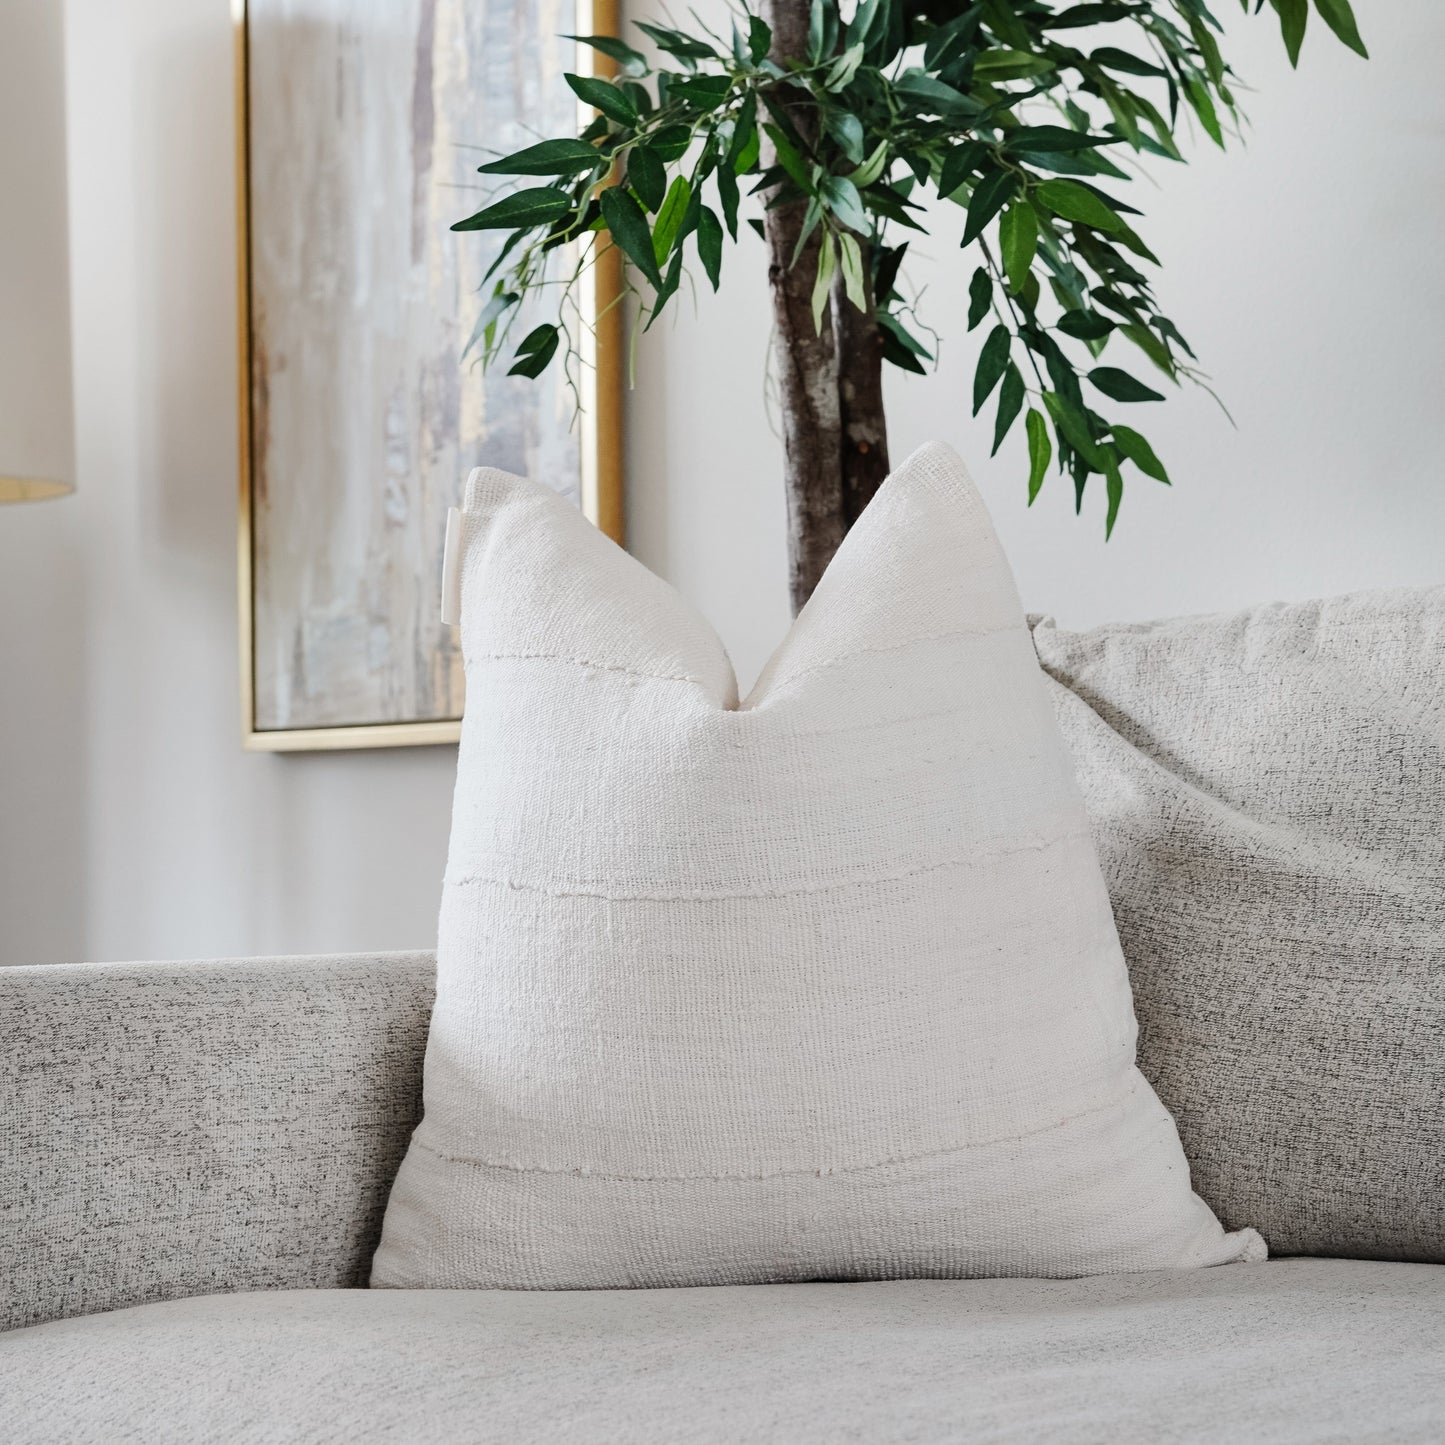 RuffledThread Home & Living > Home Décor > Decorative Pillows MAZI - Authentic Mali Mudcloth Throw Pillow Cover